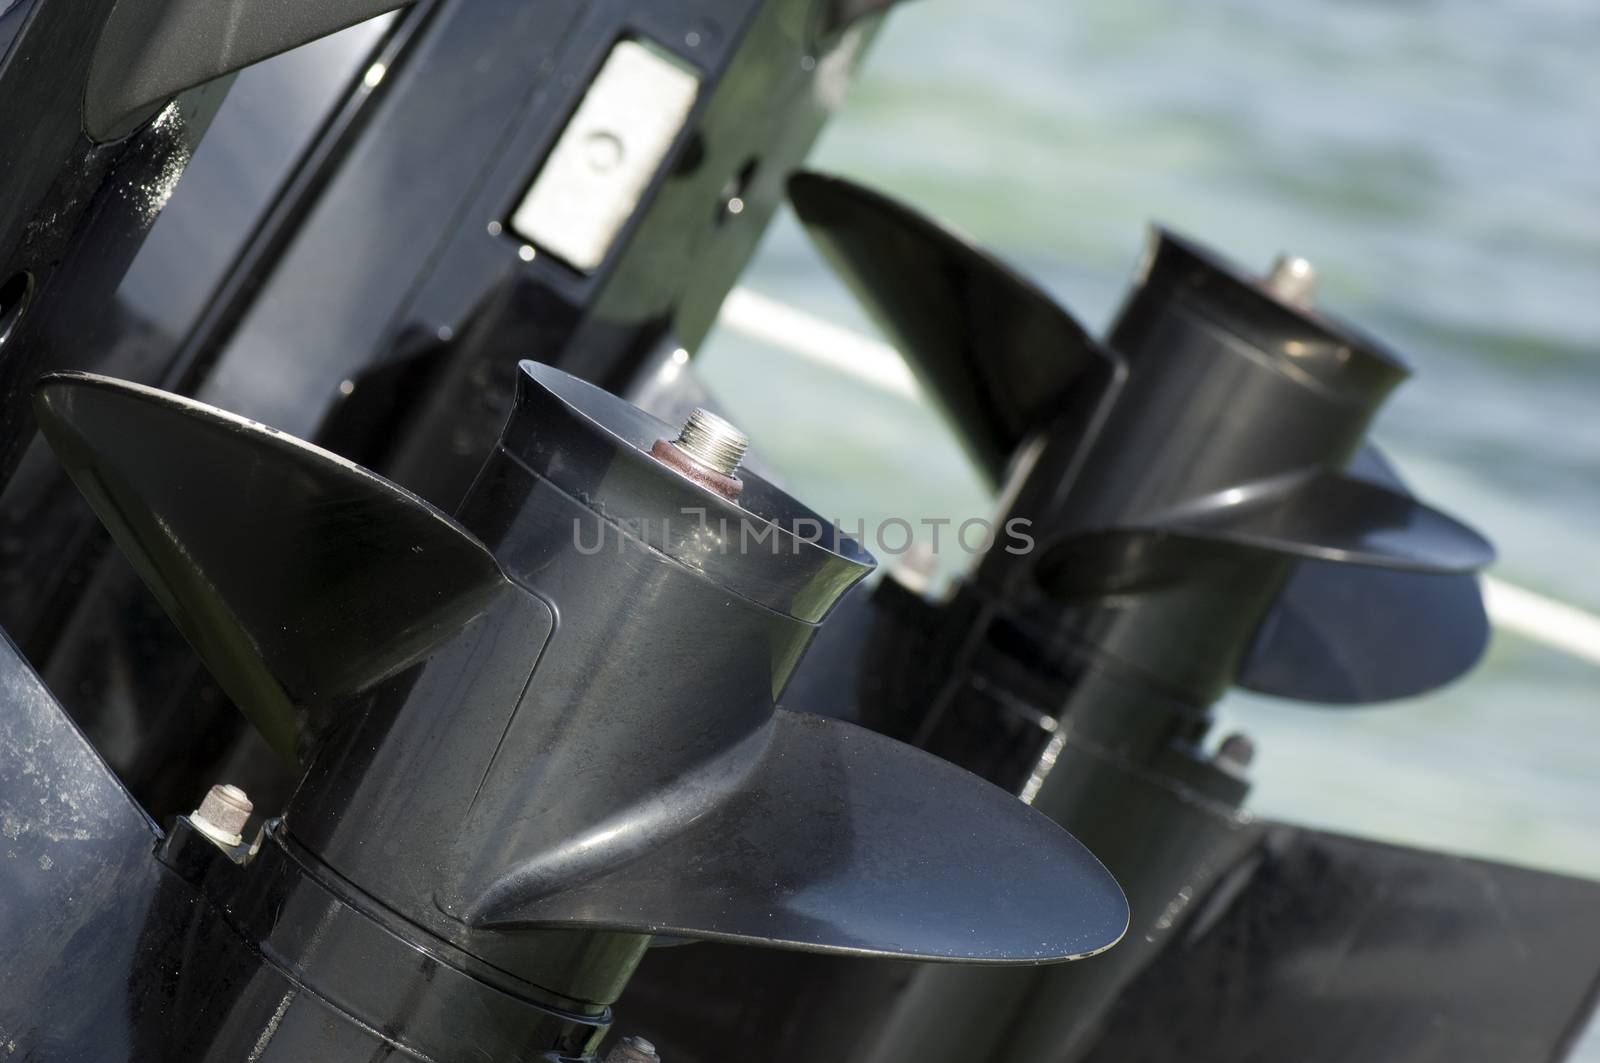 Motorboat engine closeup